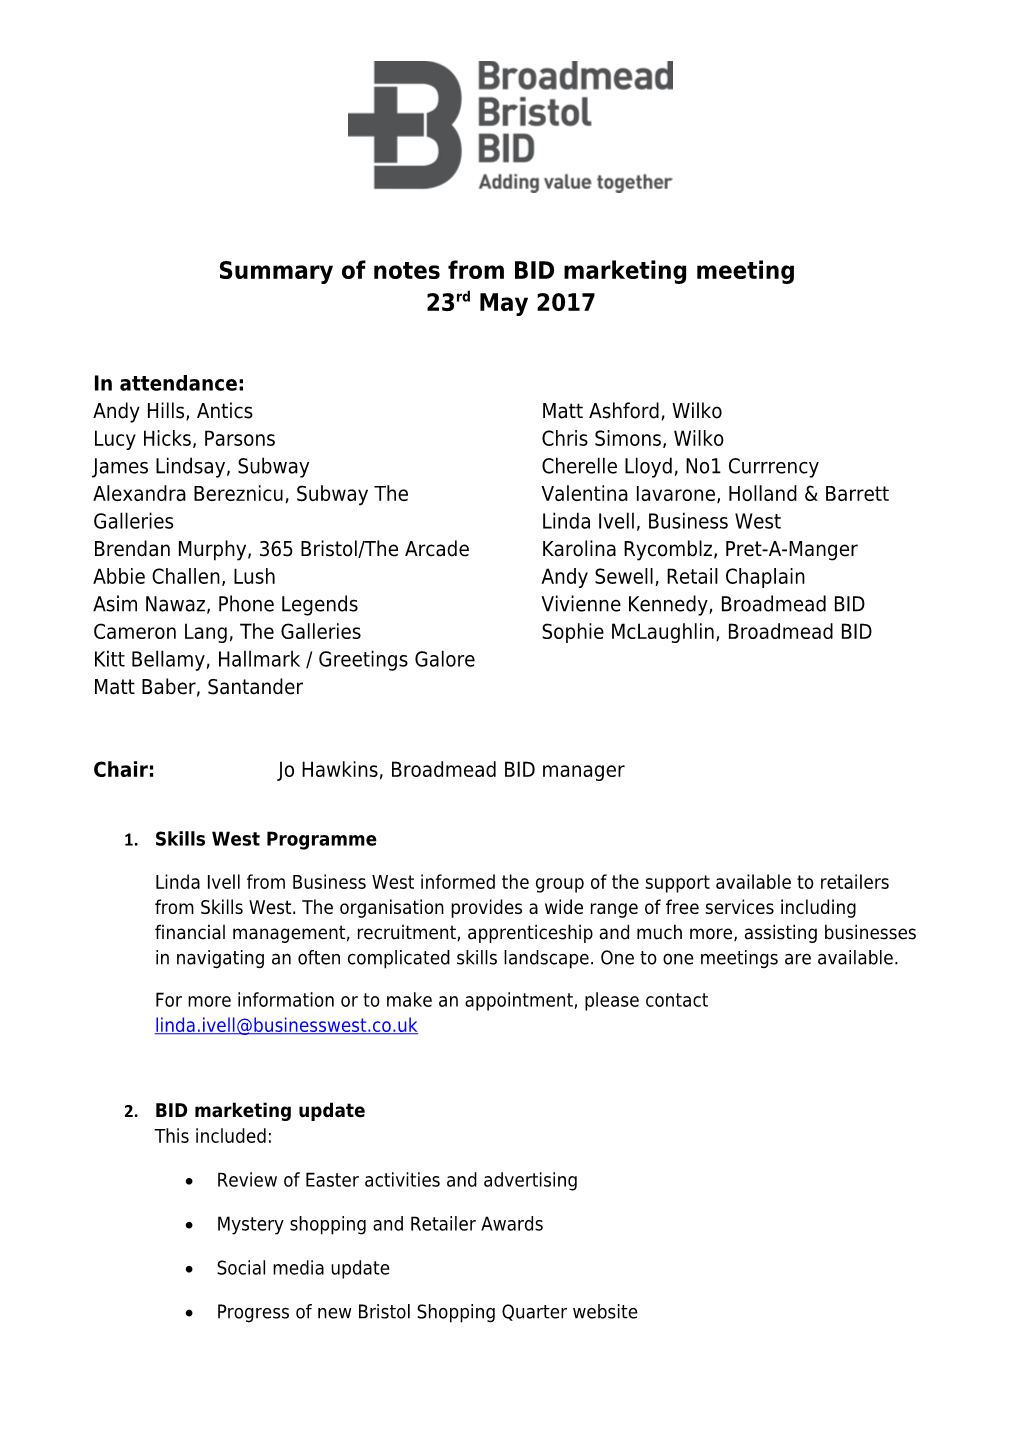 Summary of Notes from BID Marketing Meeting